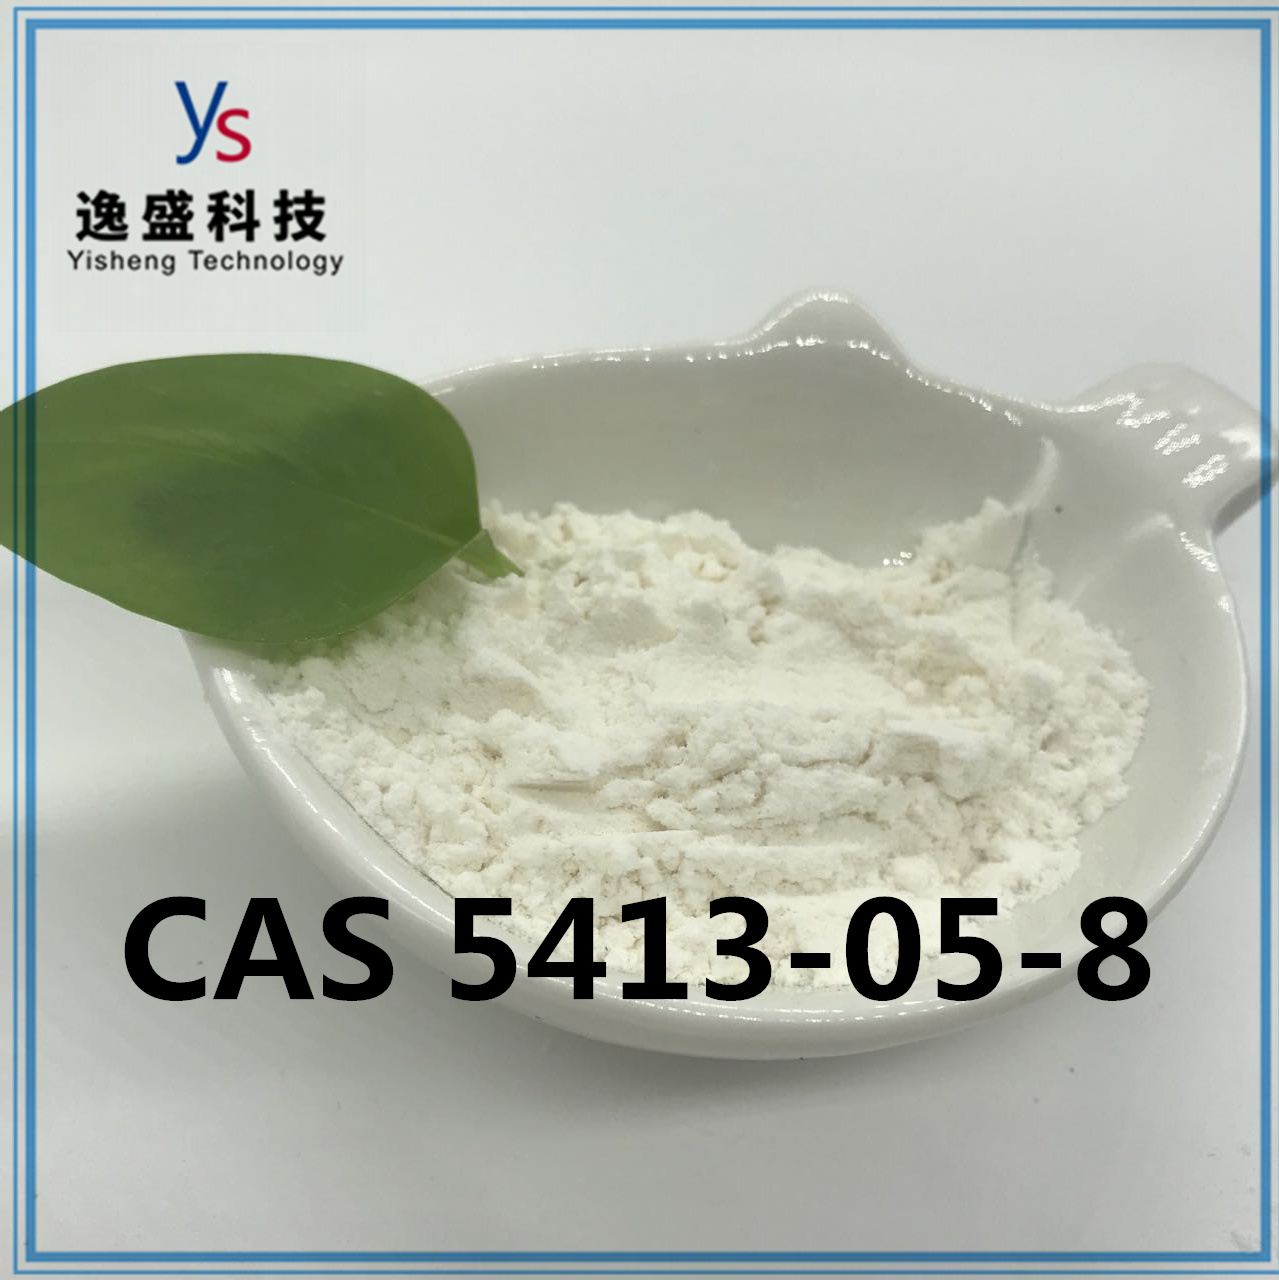 Geweldige kwaliteit CAS 5413-05-8 hyl 3-oxo-4-fenylbutanoaat